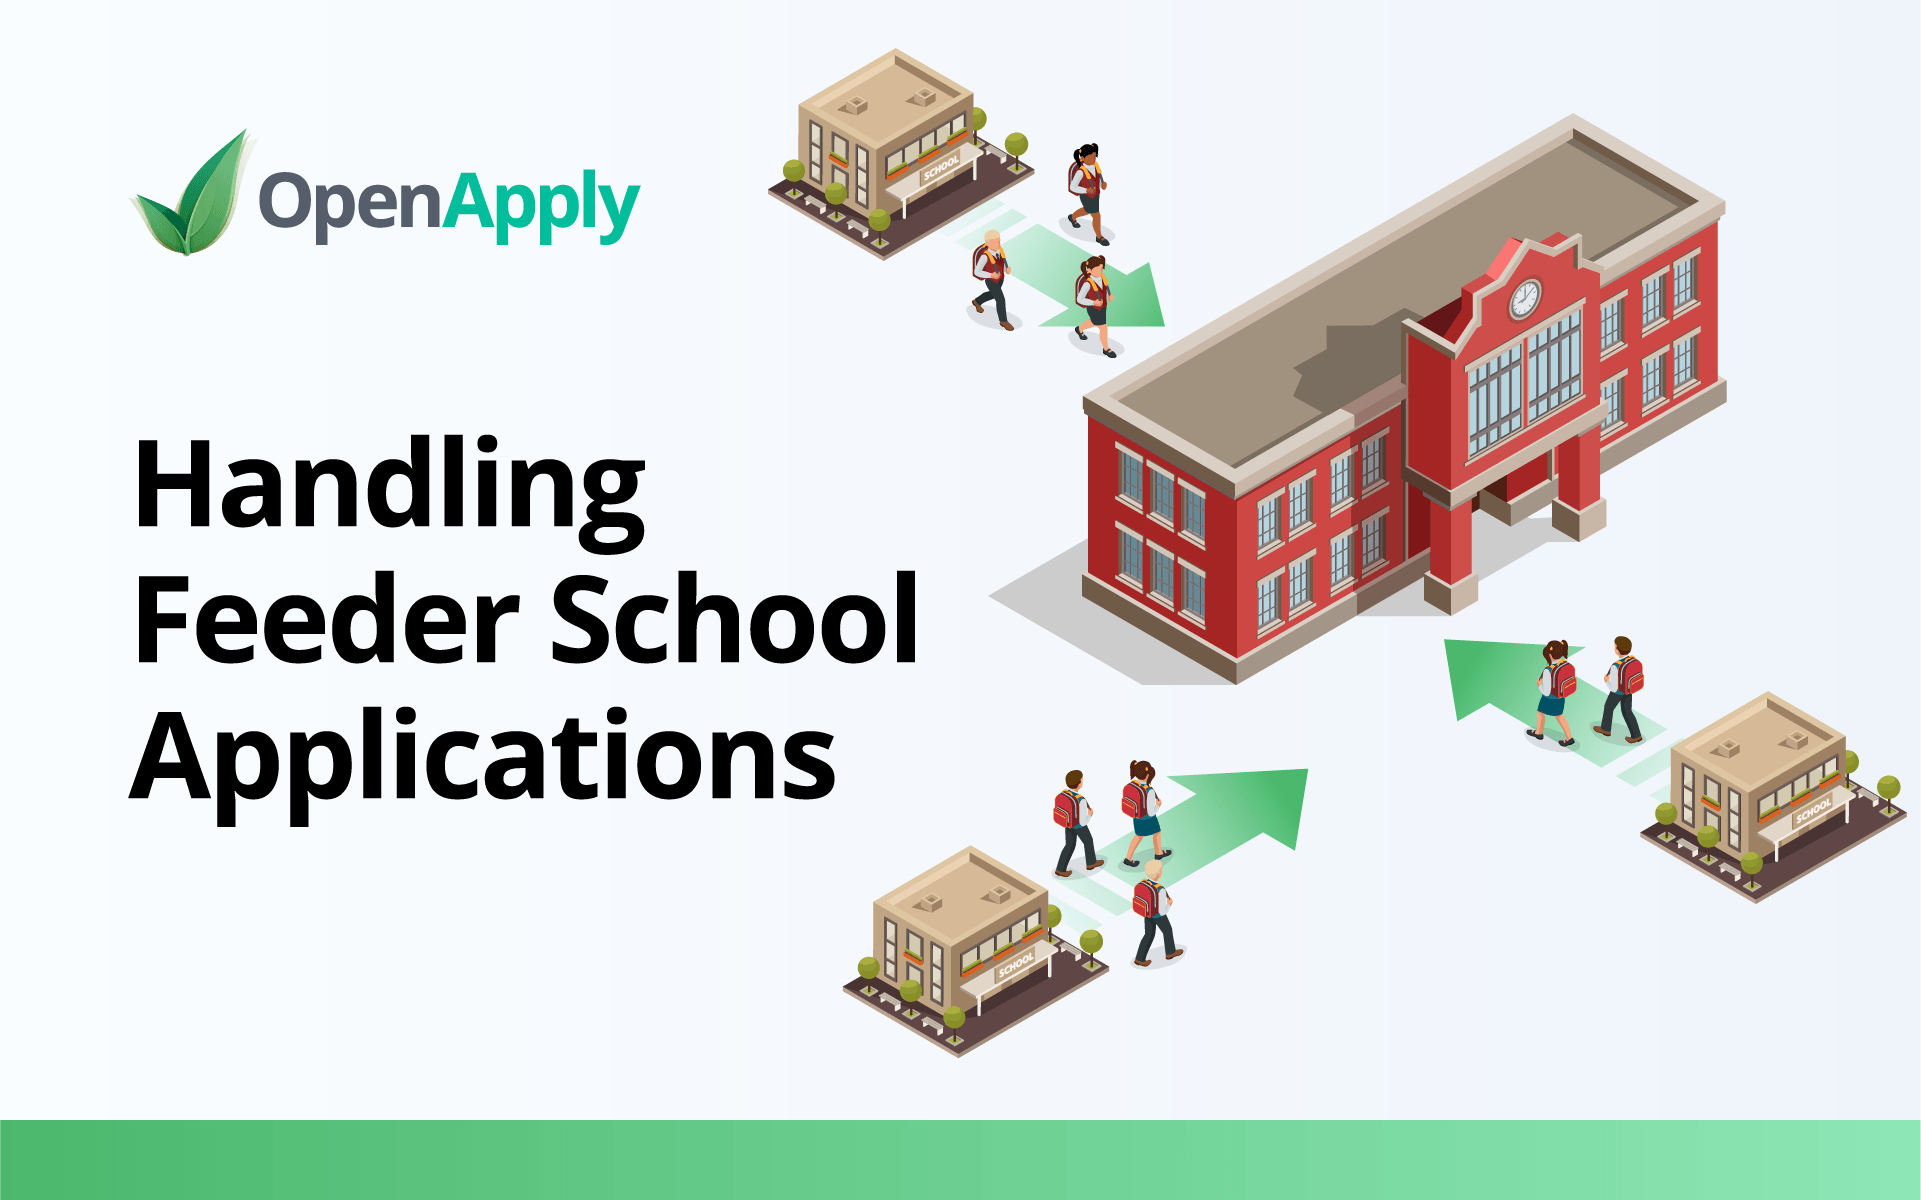 Handling Applications from Feeder Schools